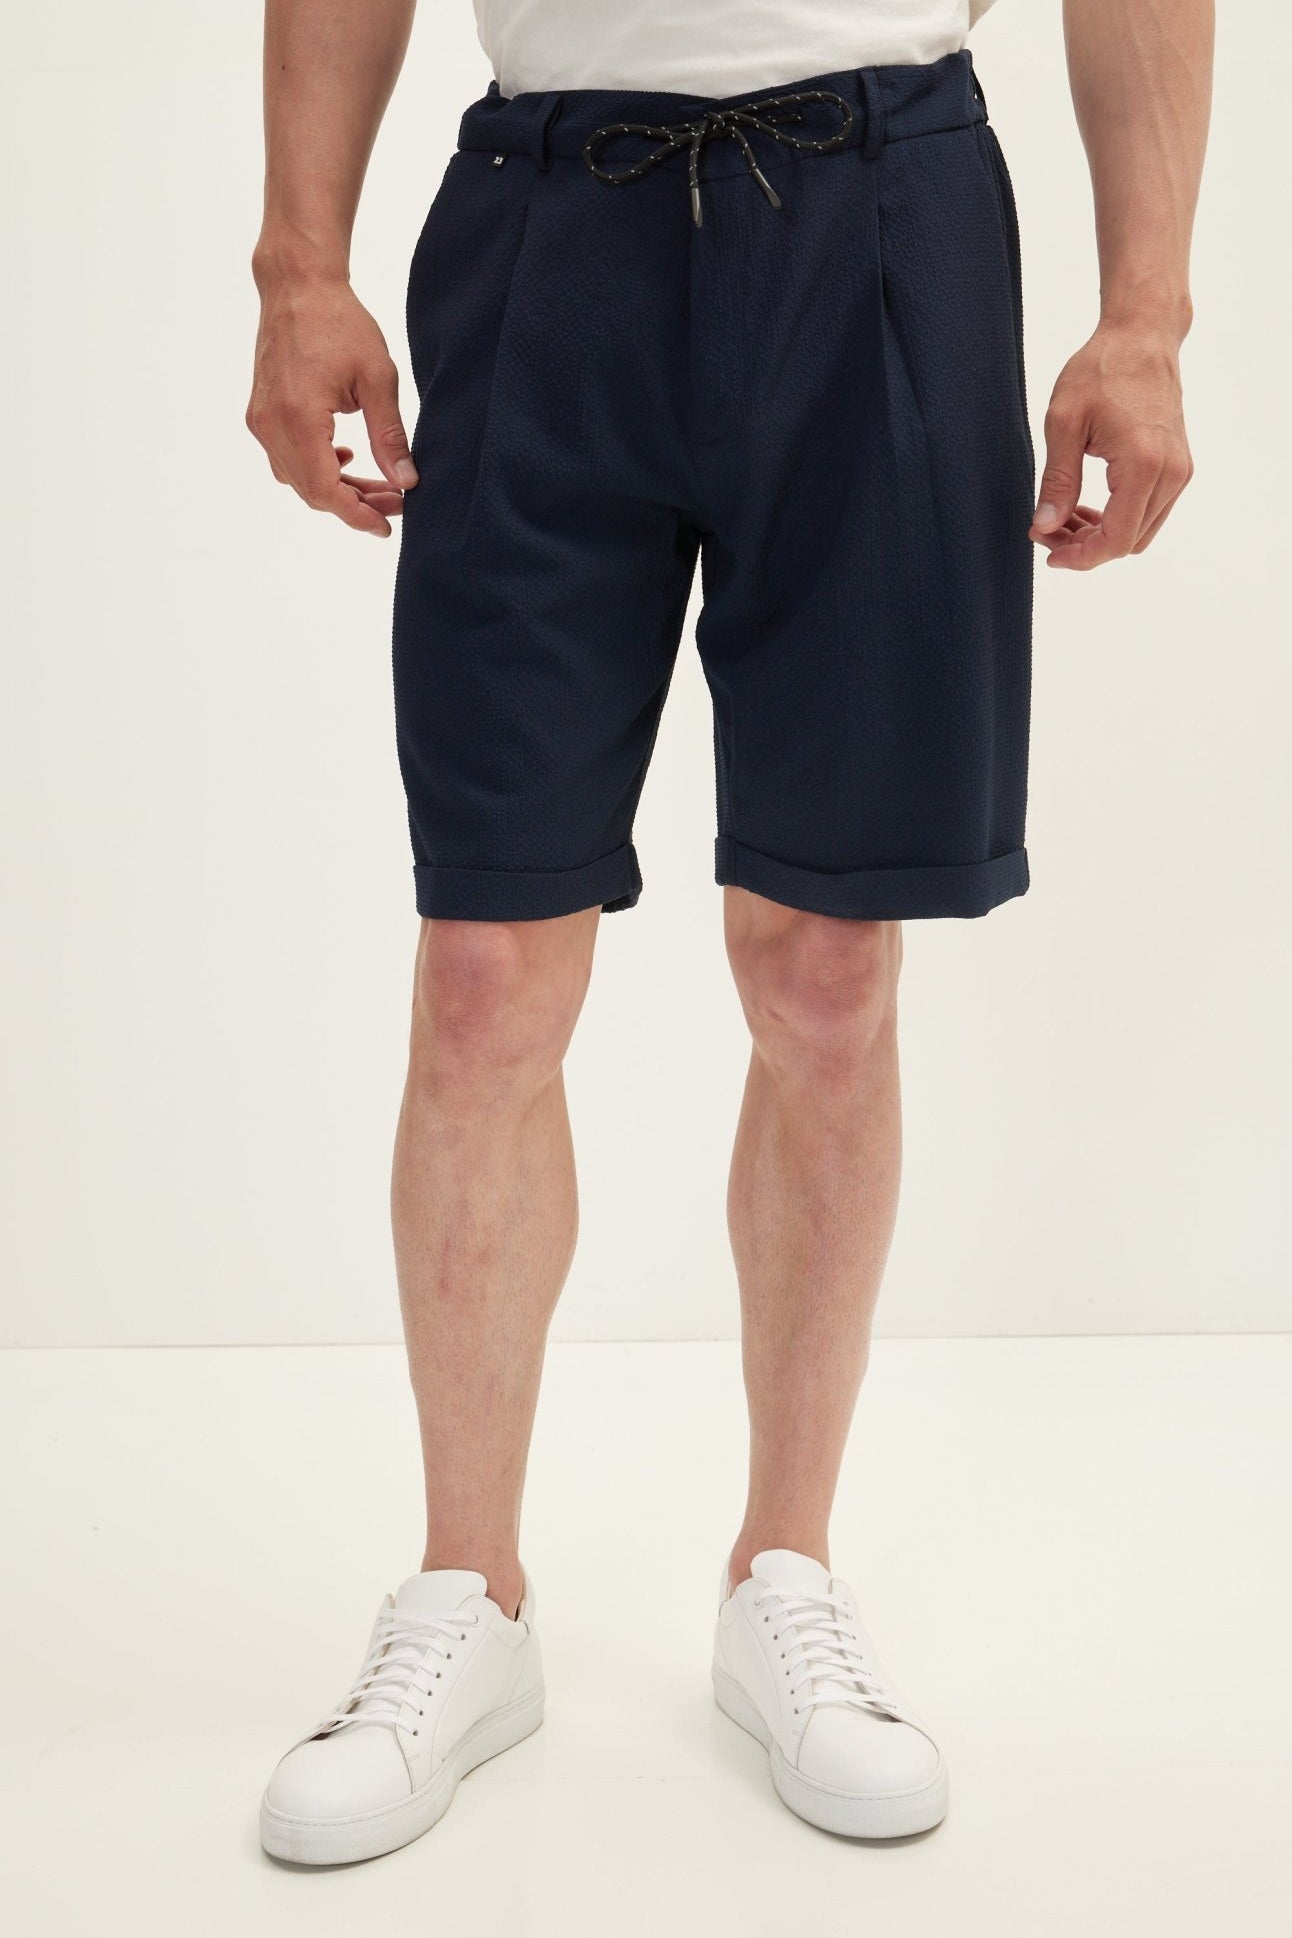 Navy Shorts - Ron Tomson